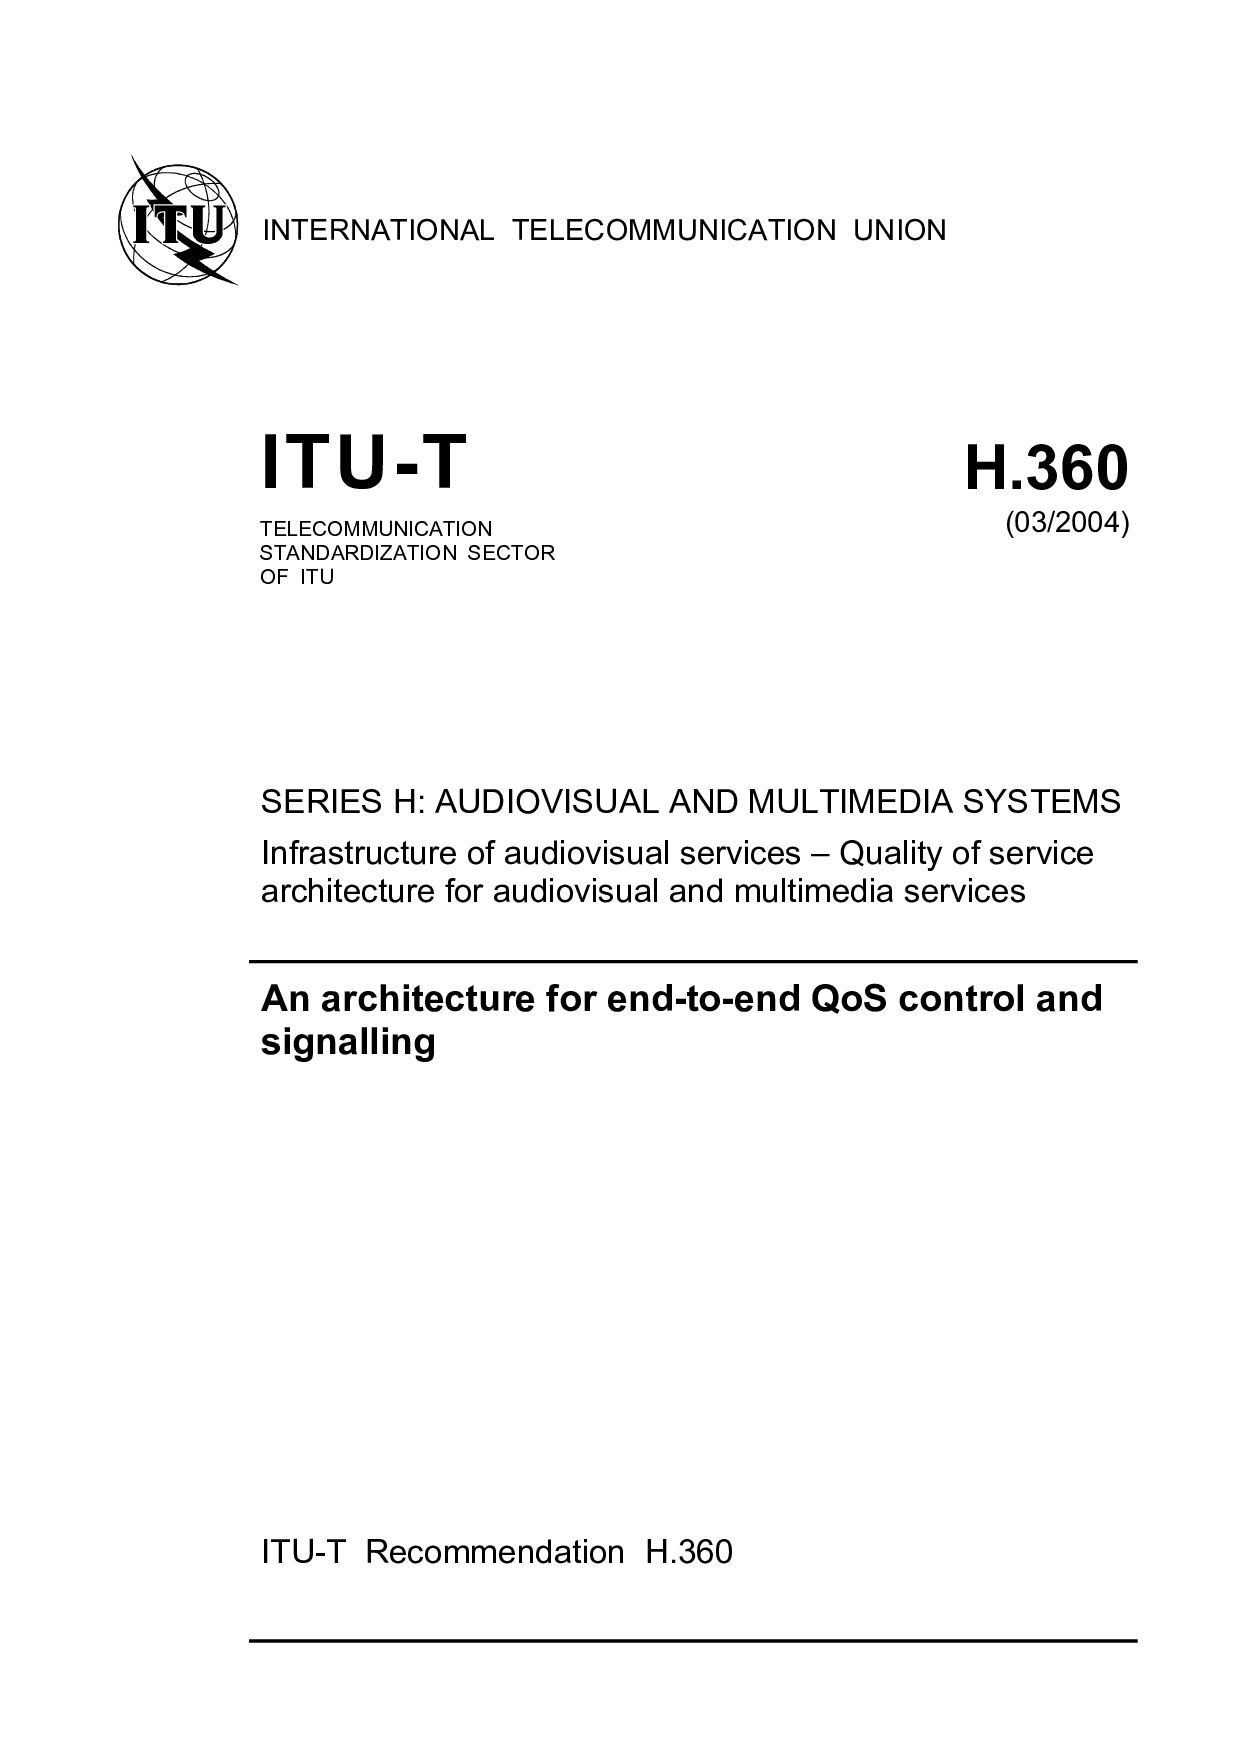 ITU-T H.360-2004